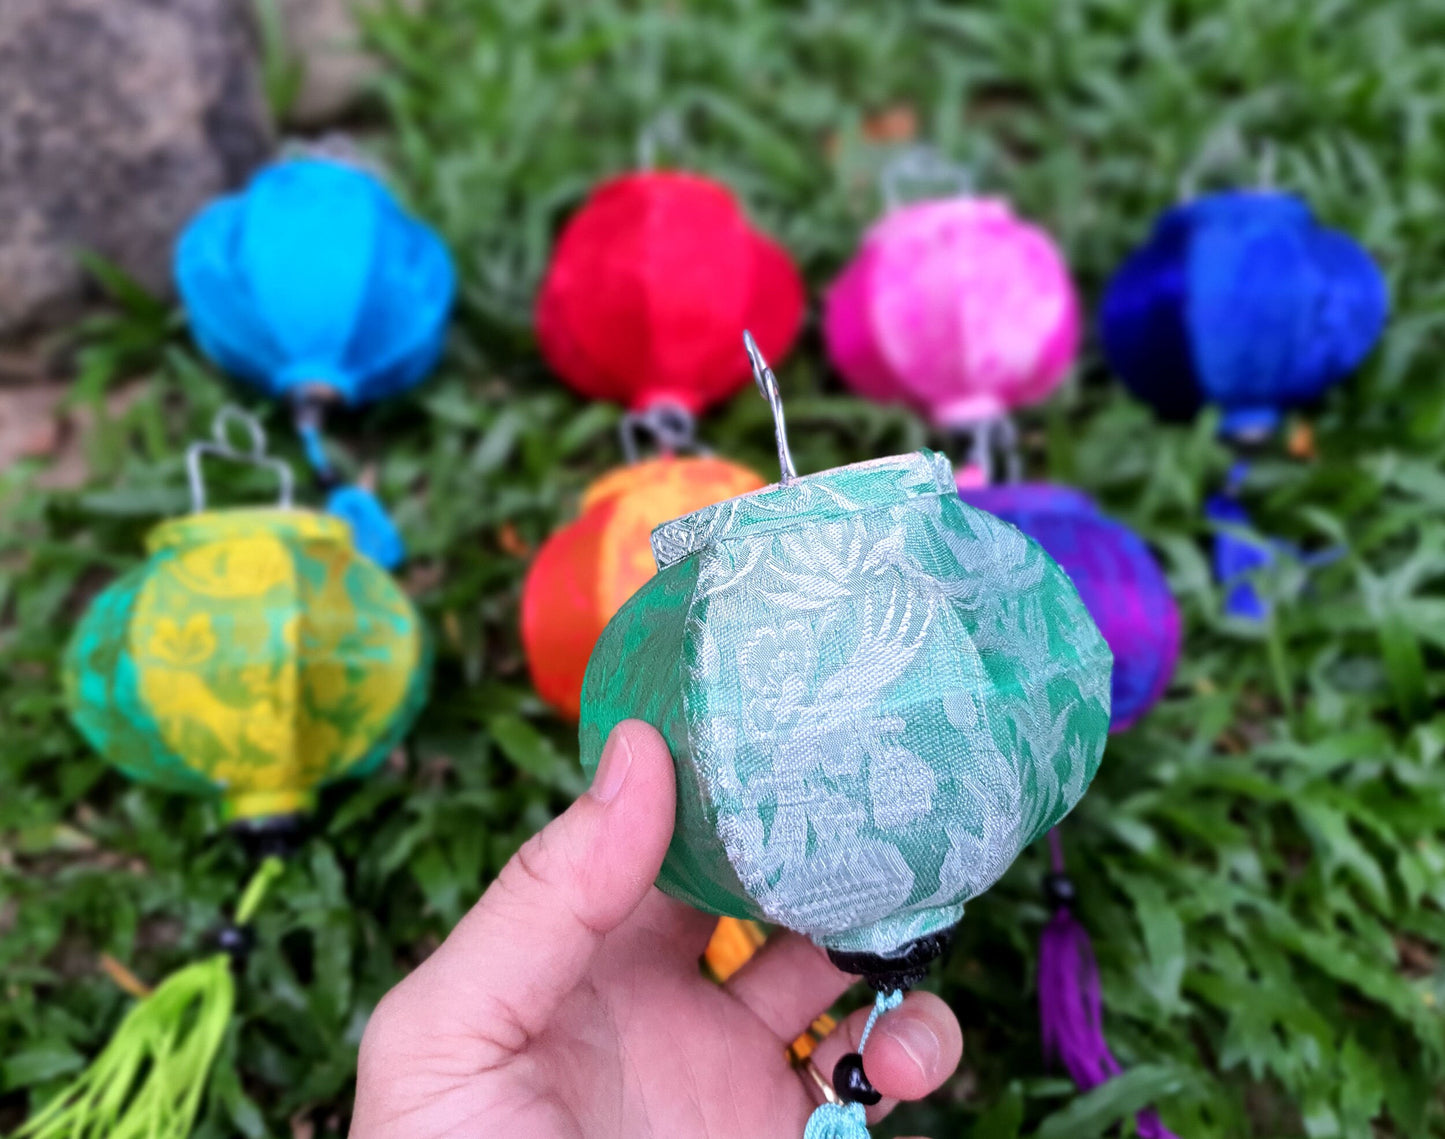 Set 100 pcs Mini Silk Lanterns 10cm for Moon festival, Mid-autumn festival lanterns, Mini lanterns decorate the outdoor garden